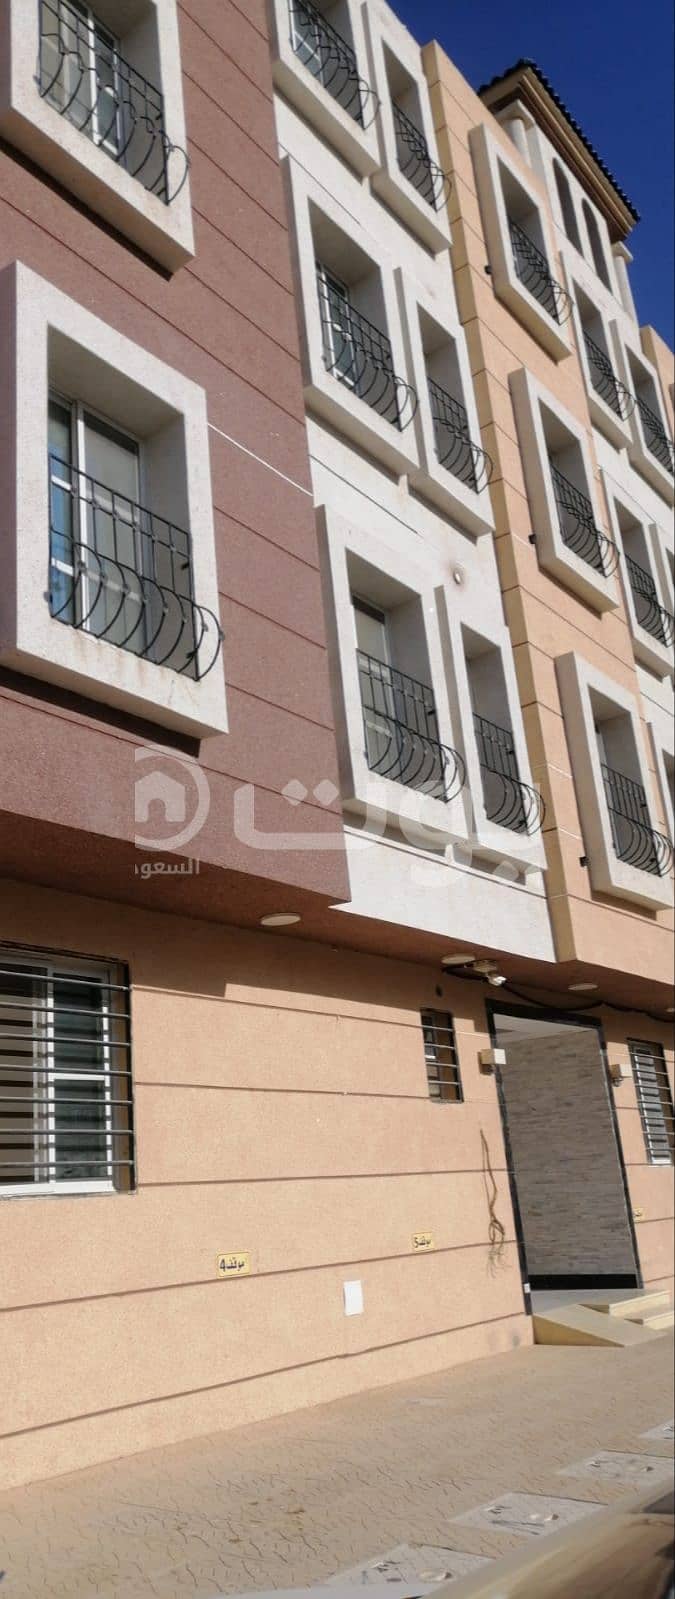 Ground floor apartment for sale in Dhahrat Laban, west of Riyadh